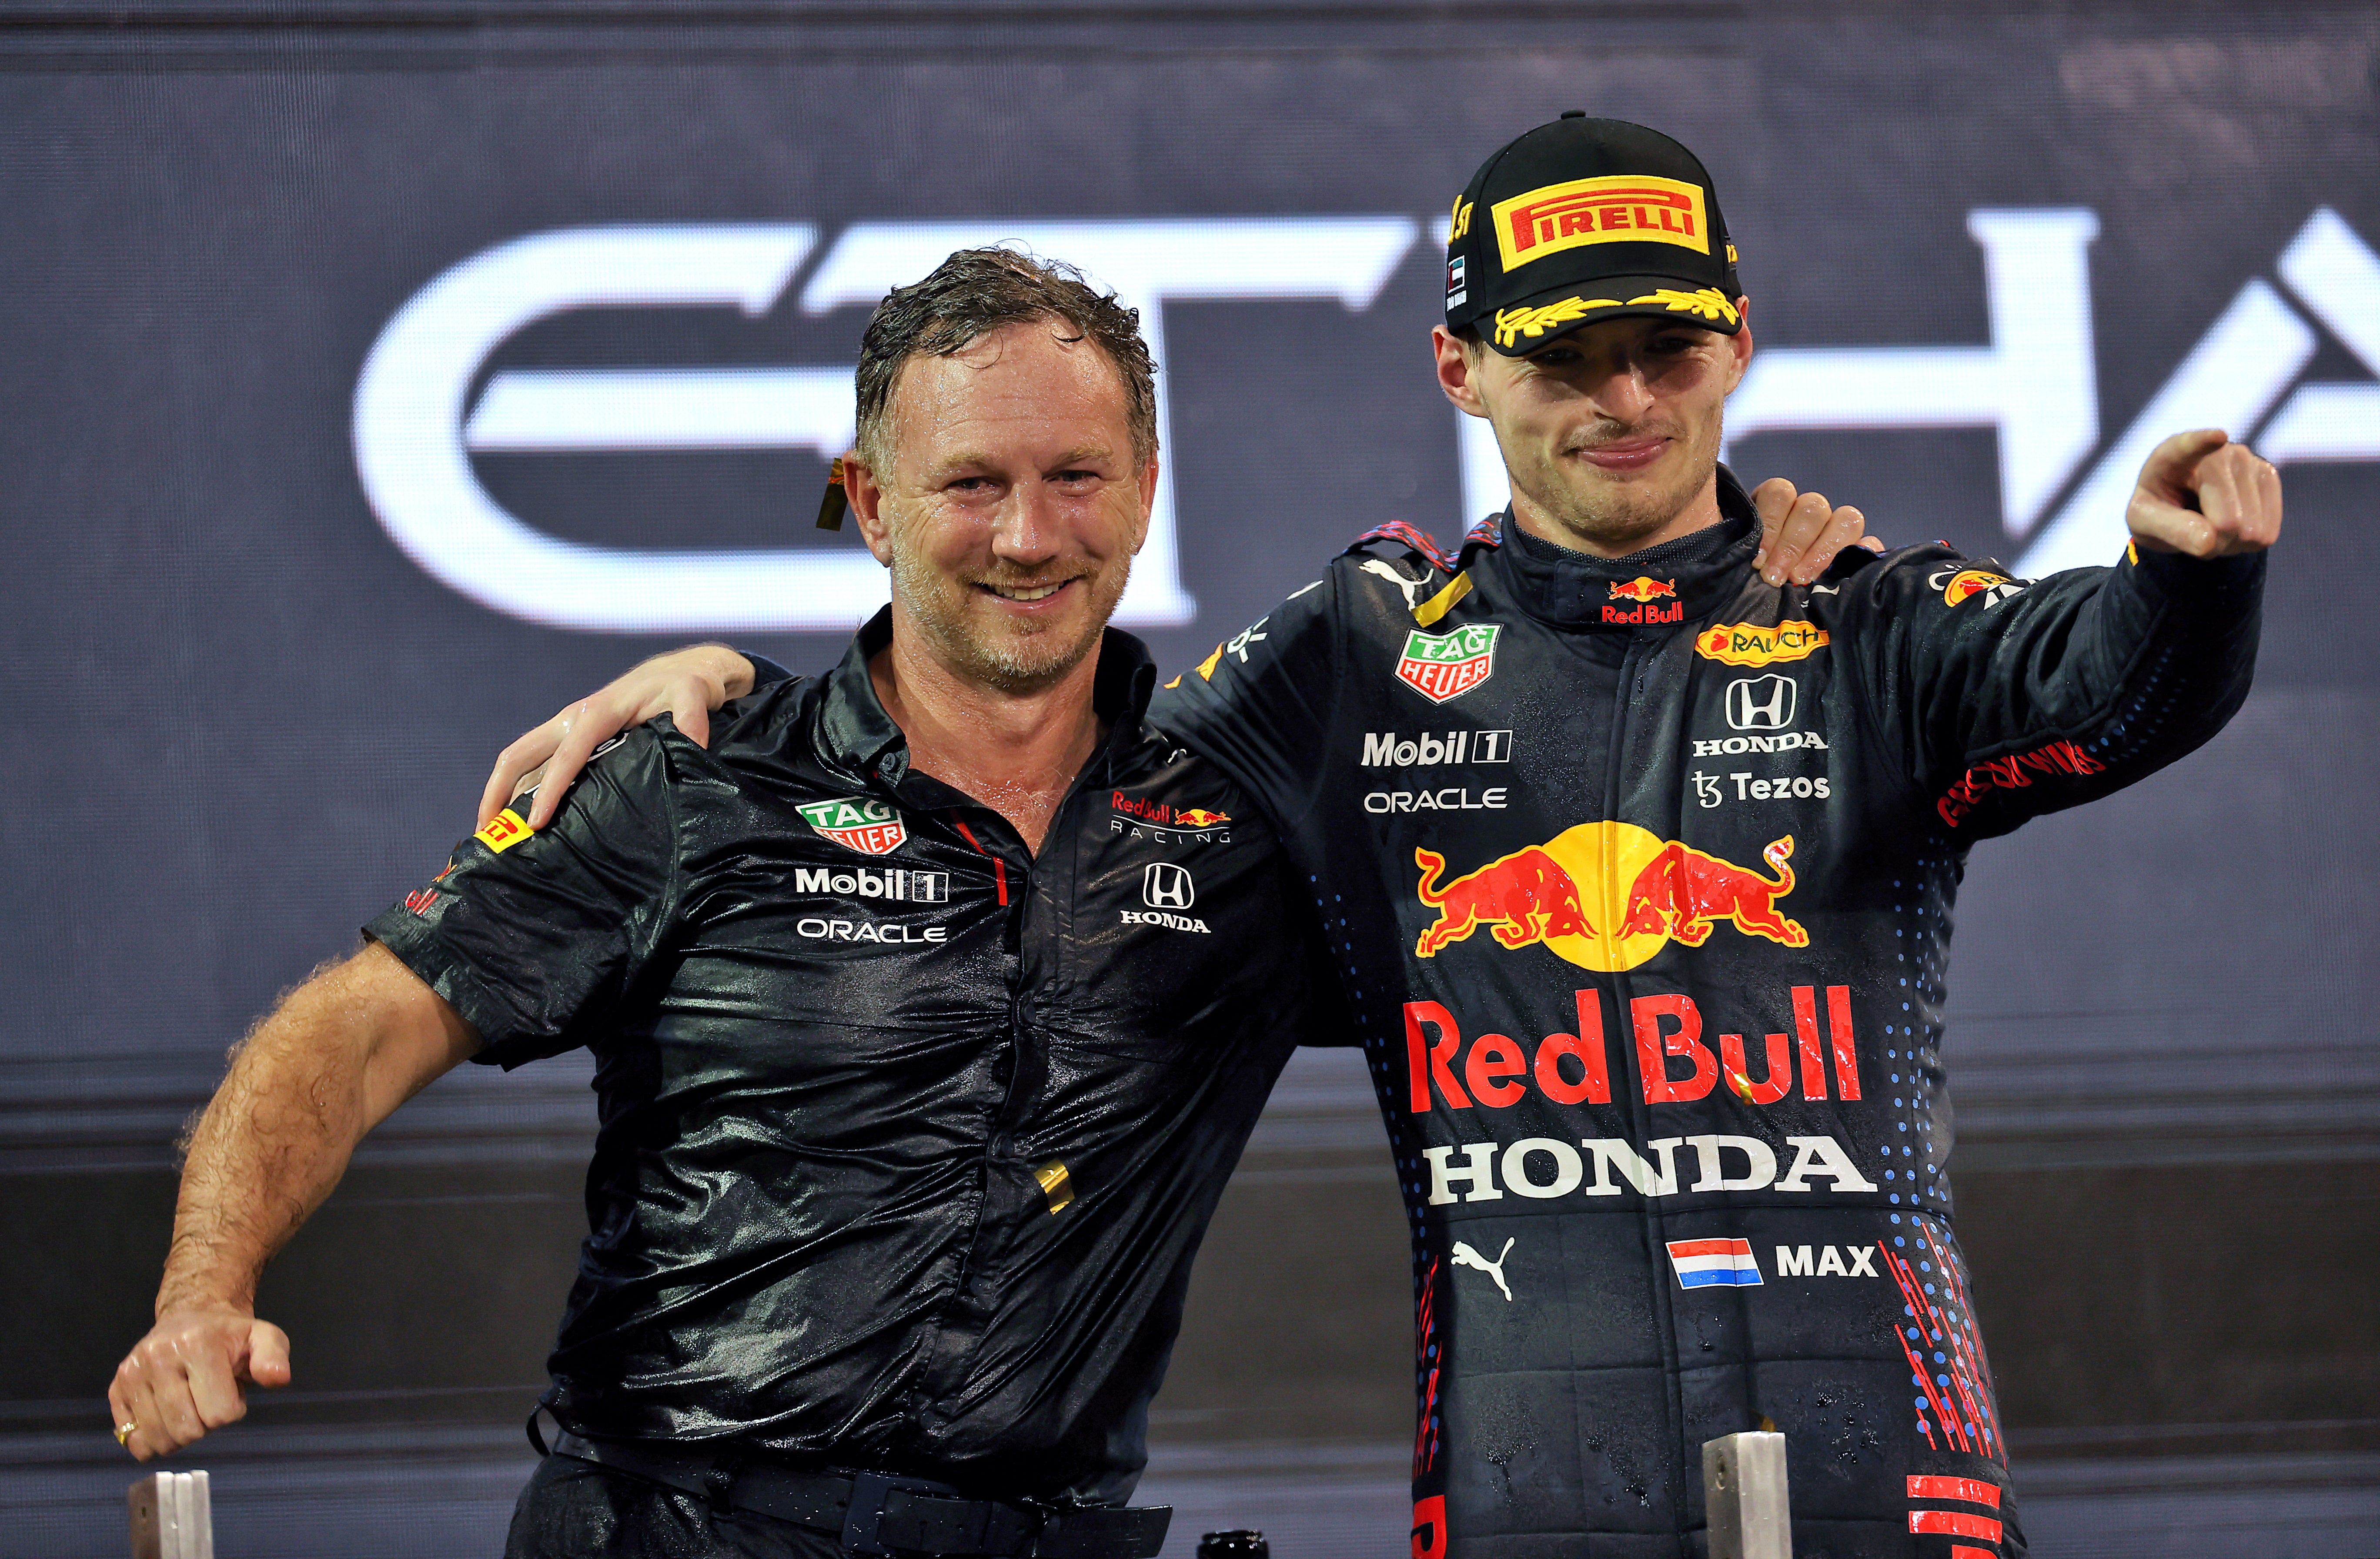 Horner’s team Red Bull won the F1 title last season